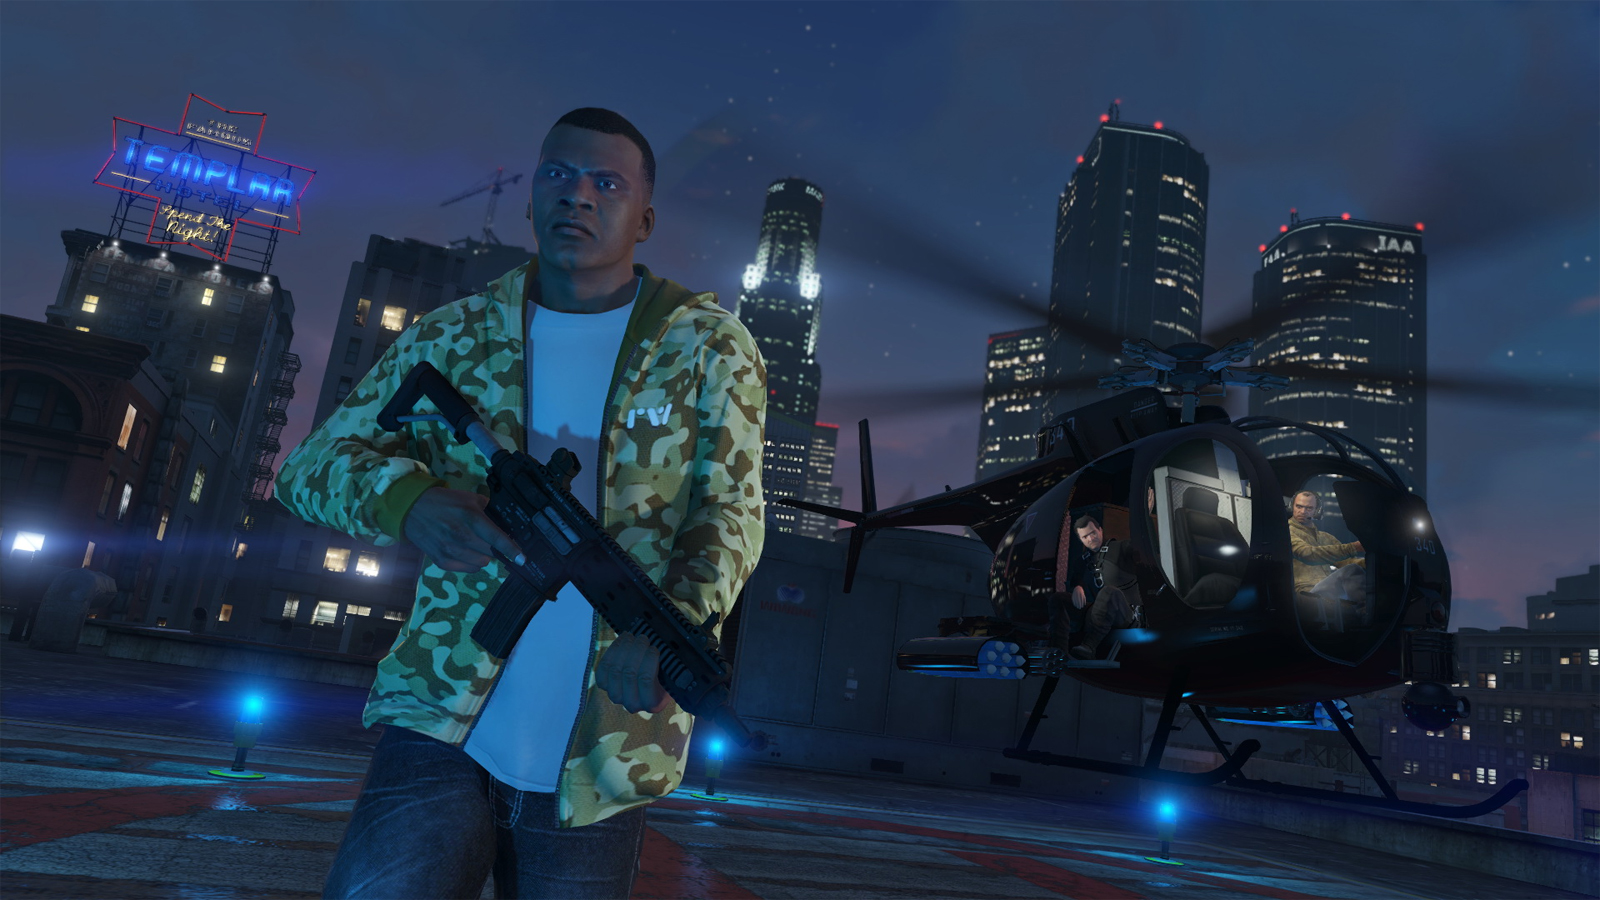 Grand Theft Auto GTA V 5 FIVE Rockstar Social Club KEY (PC